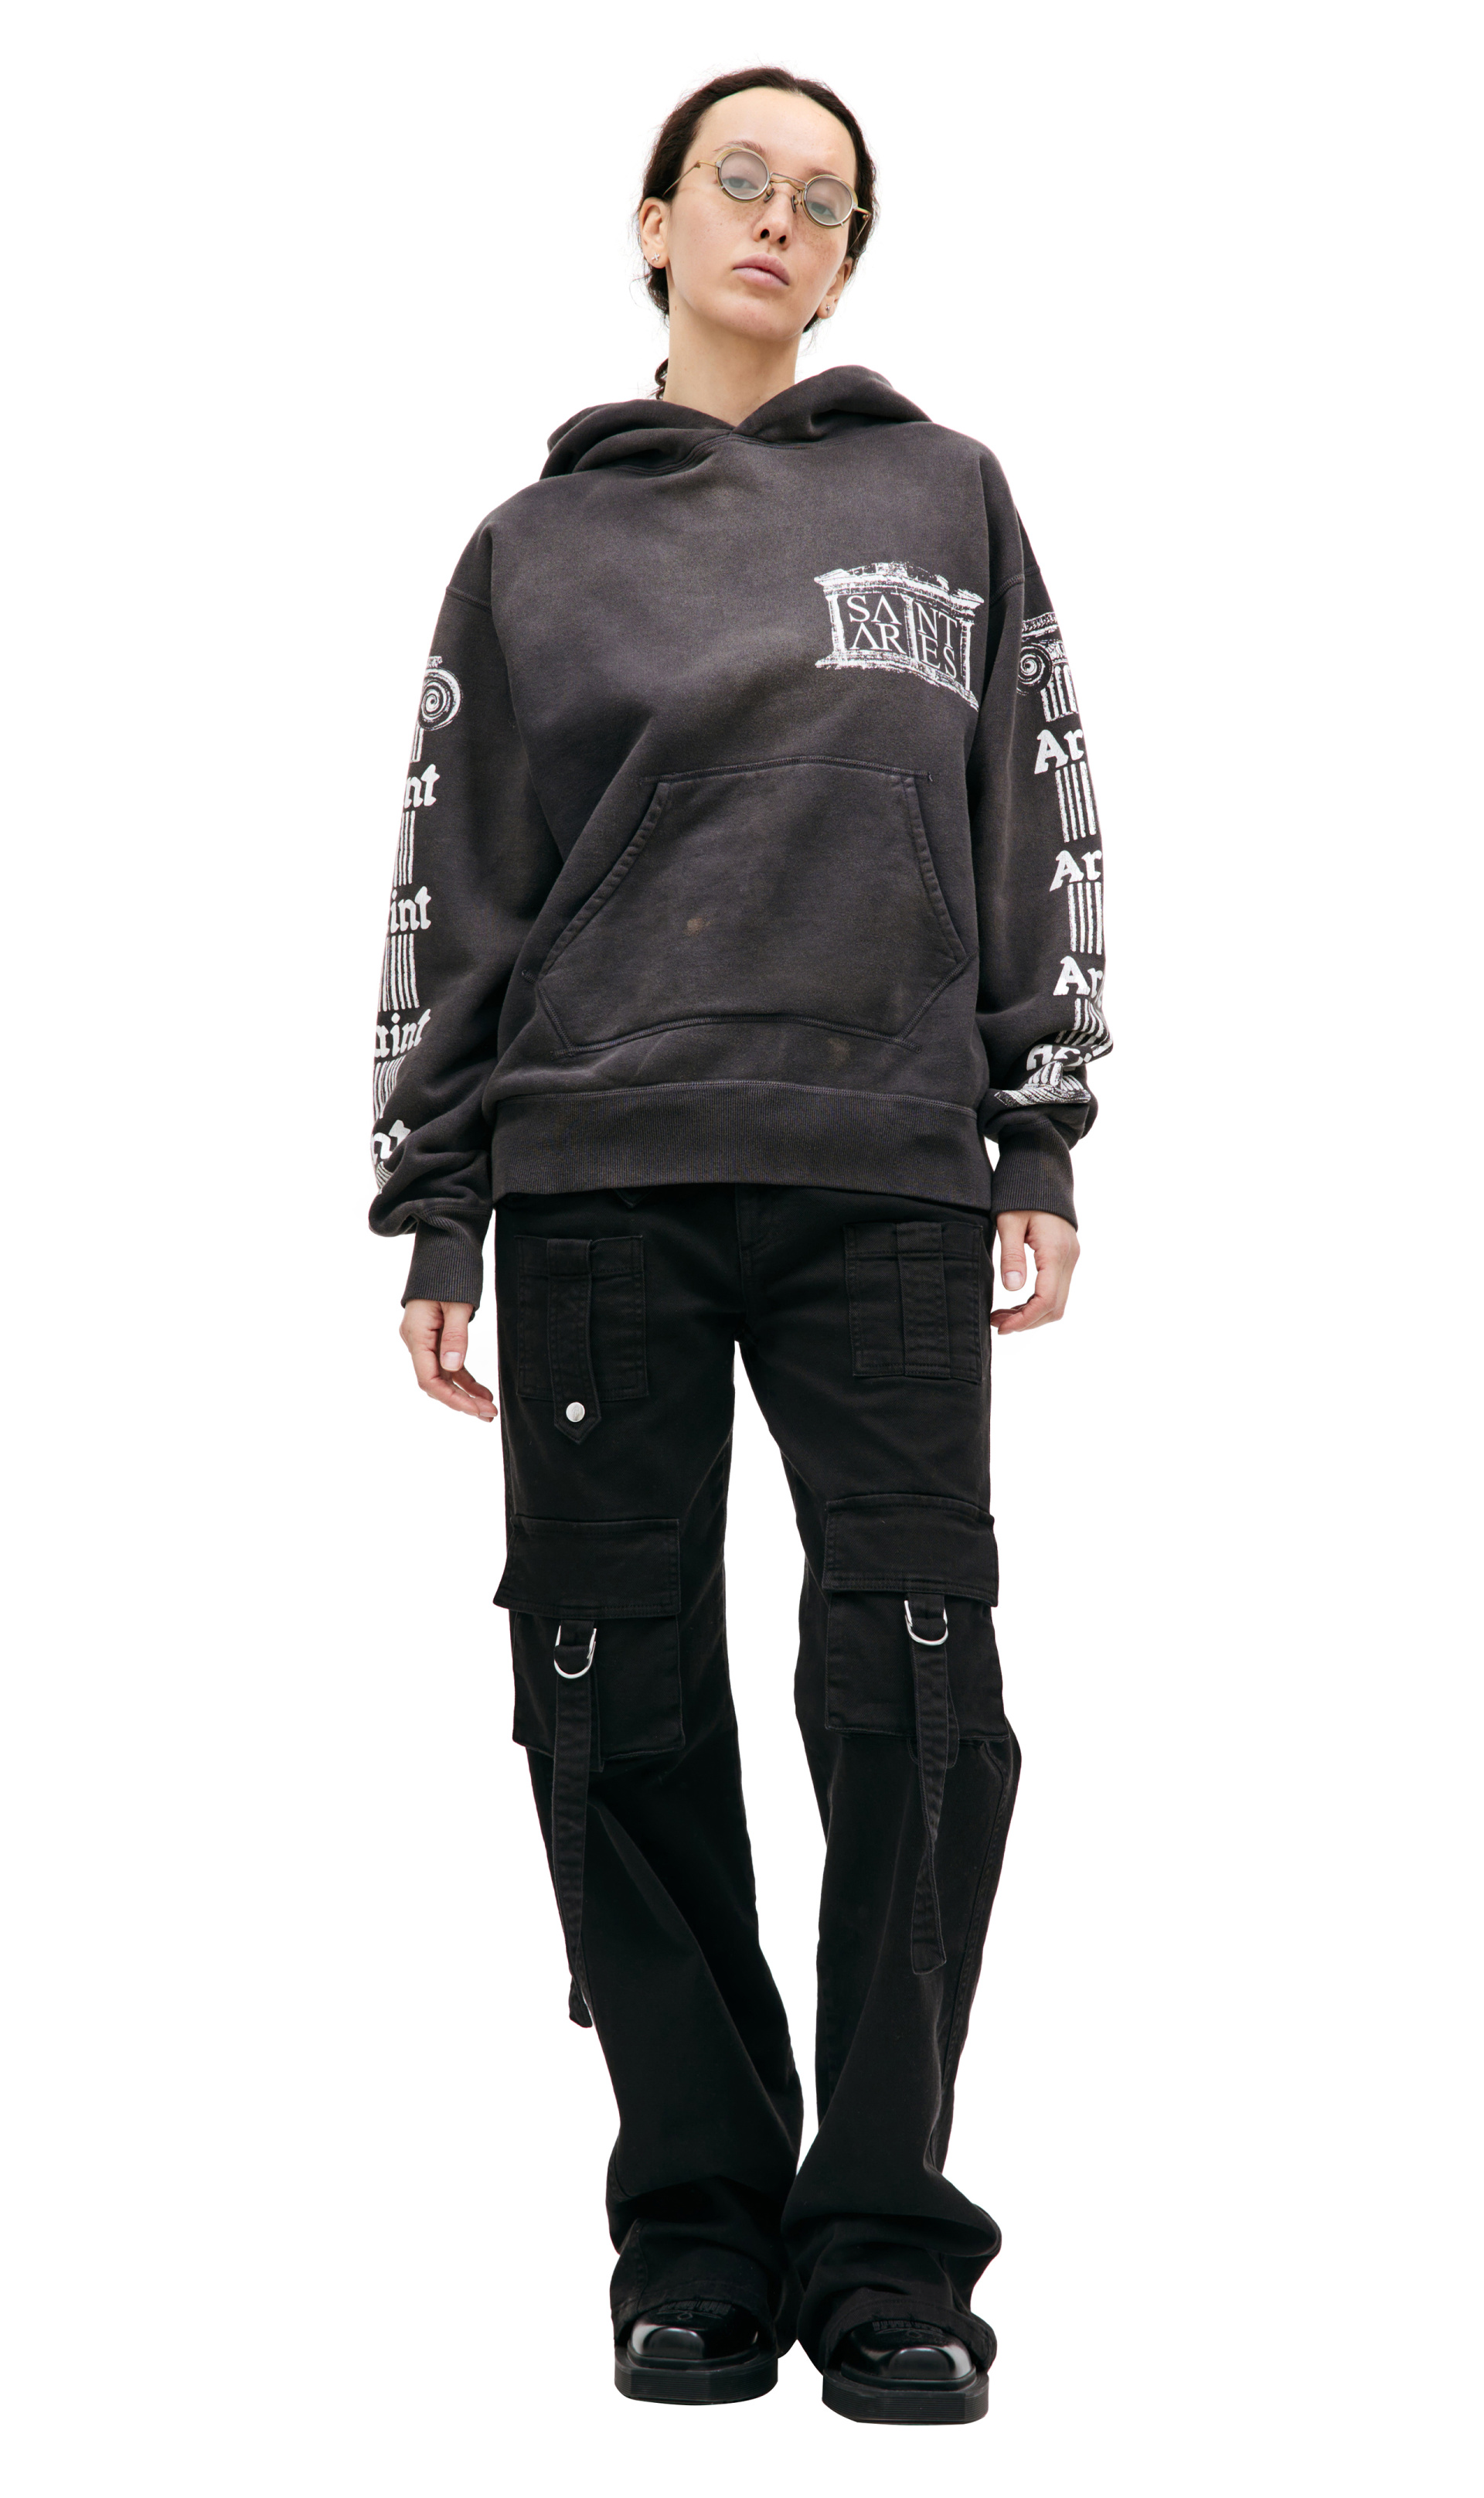 Buy Fear of God Essentials men athletic legging in black for $157